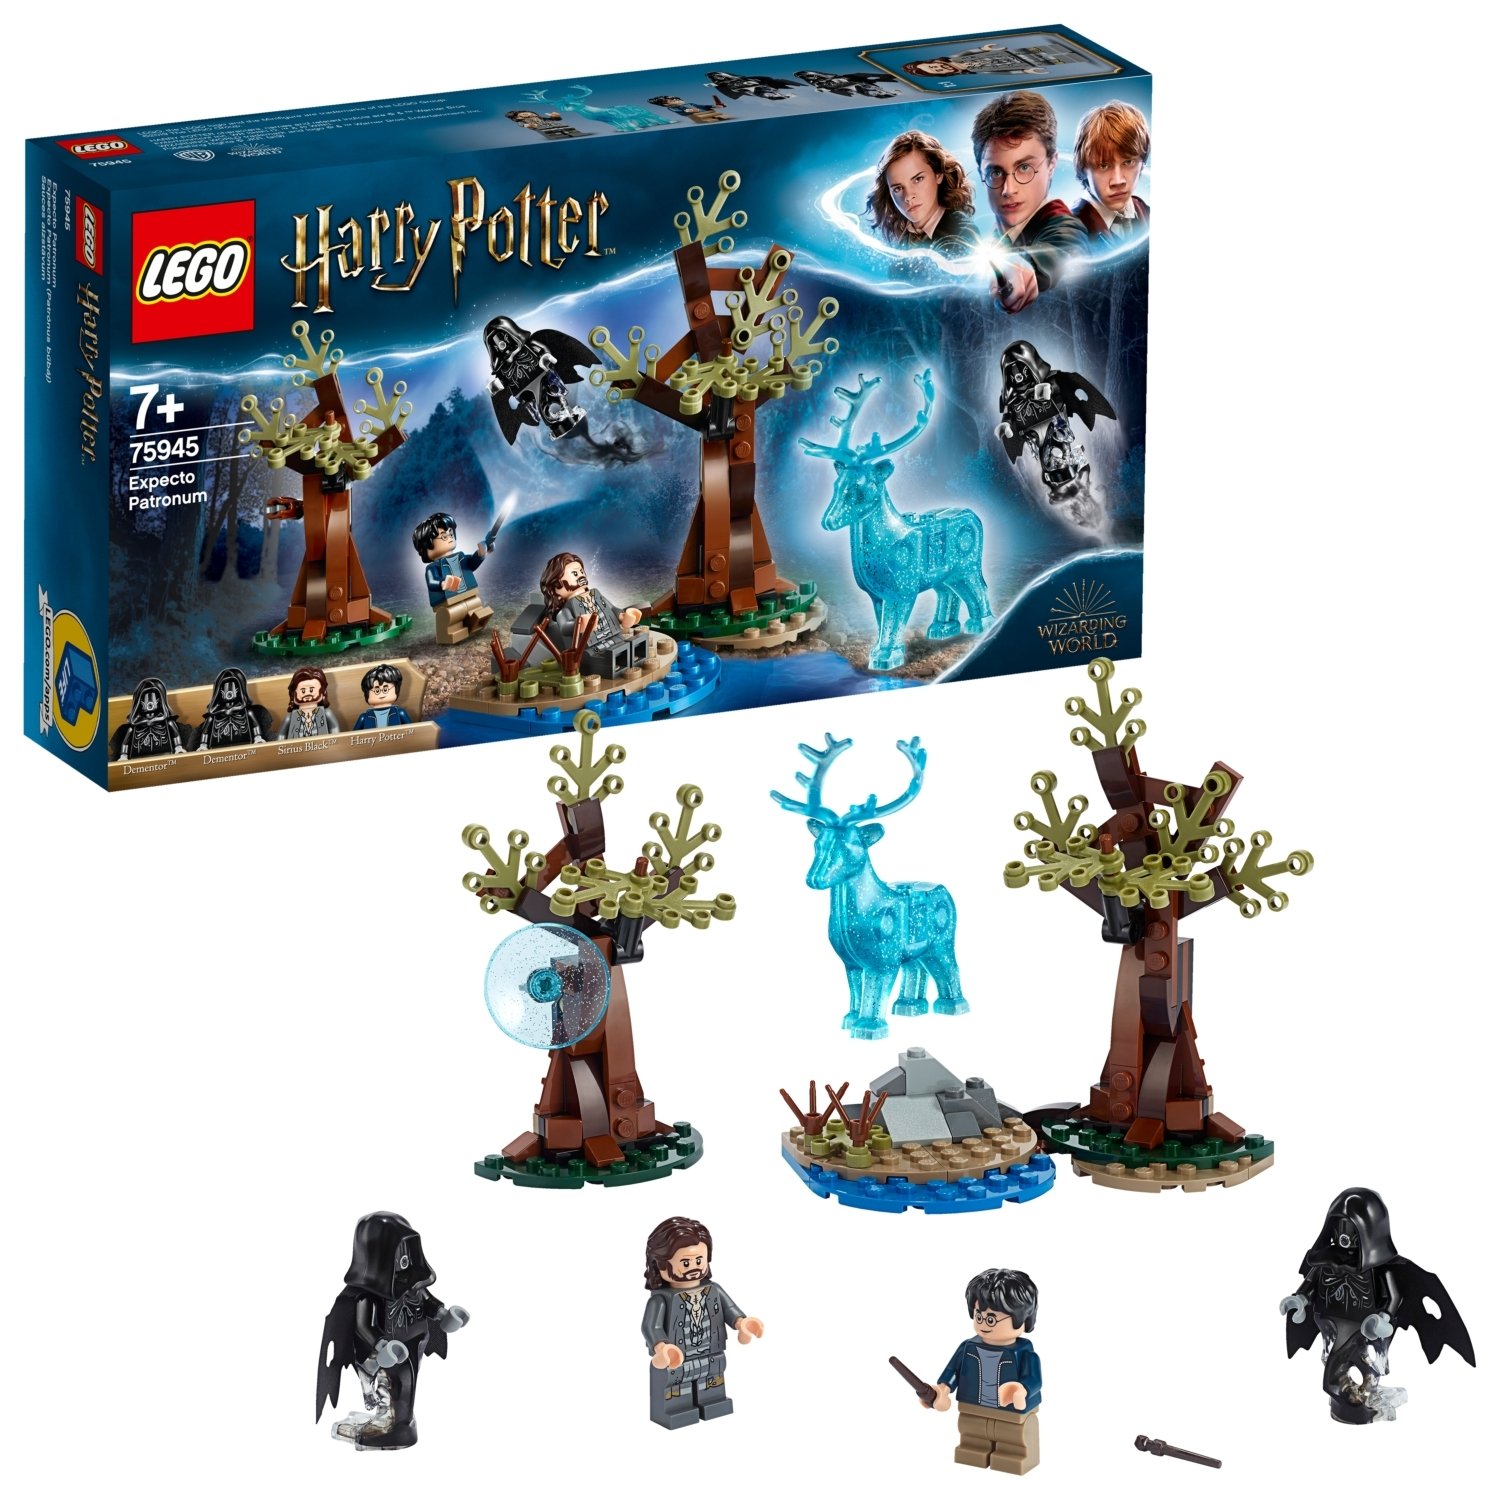 LEGO Harry Potter Expecto Patronum Building Set - 75945